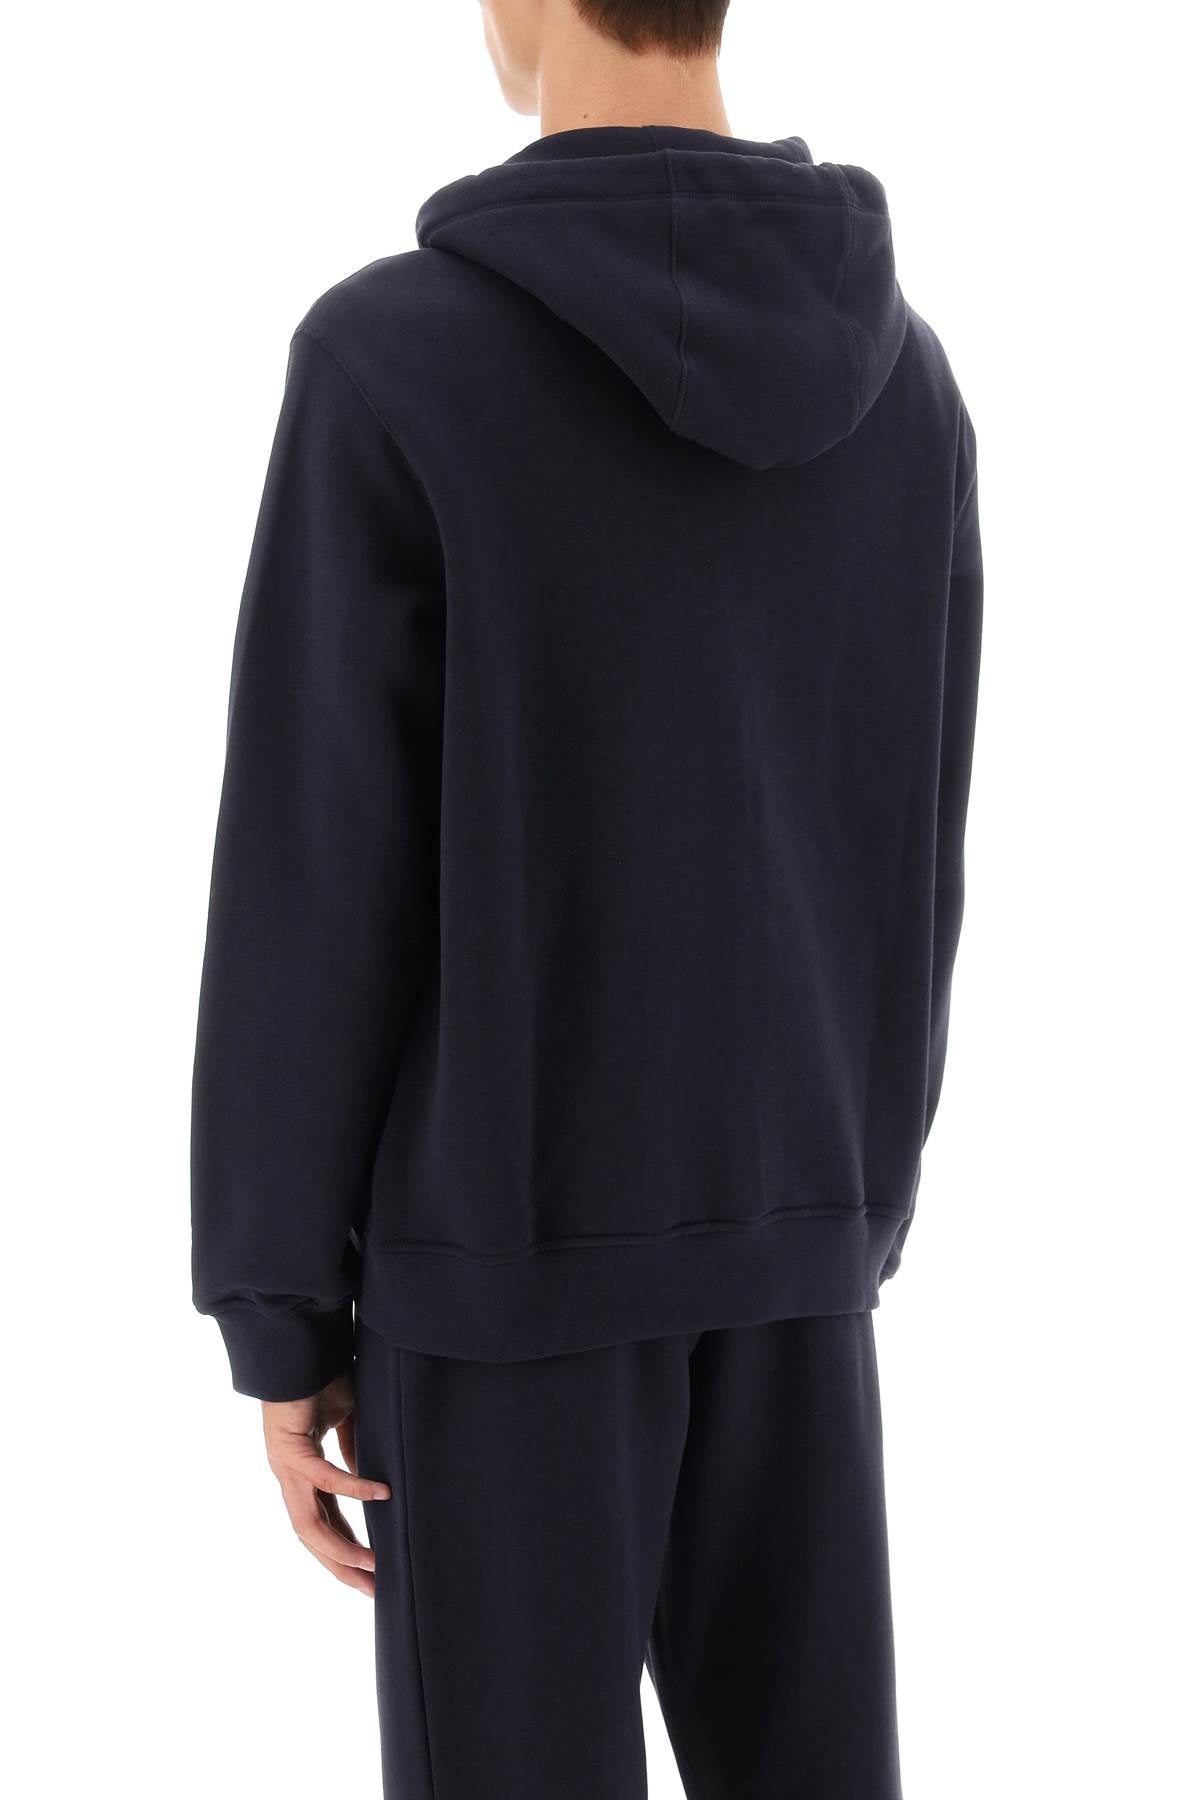 Agnona Agnona cotton and cashmere hoodie